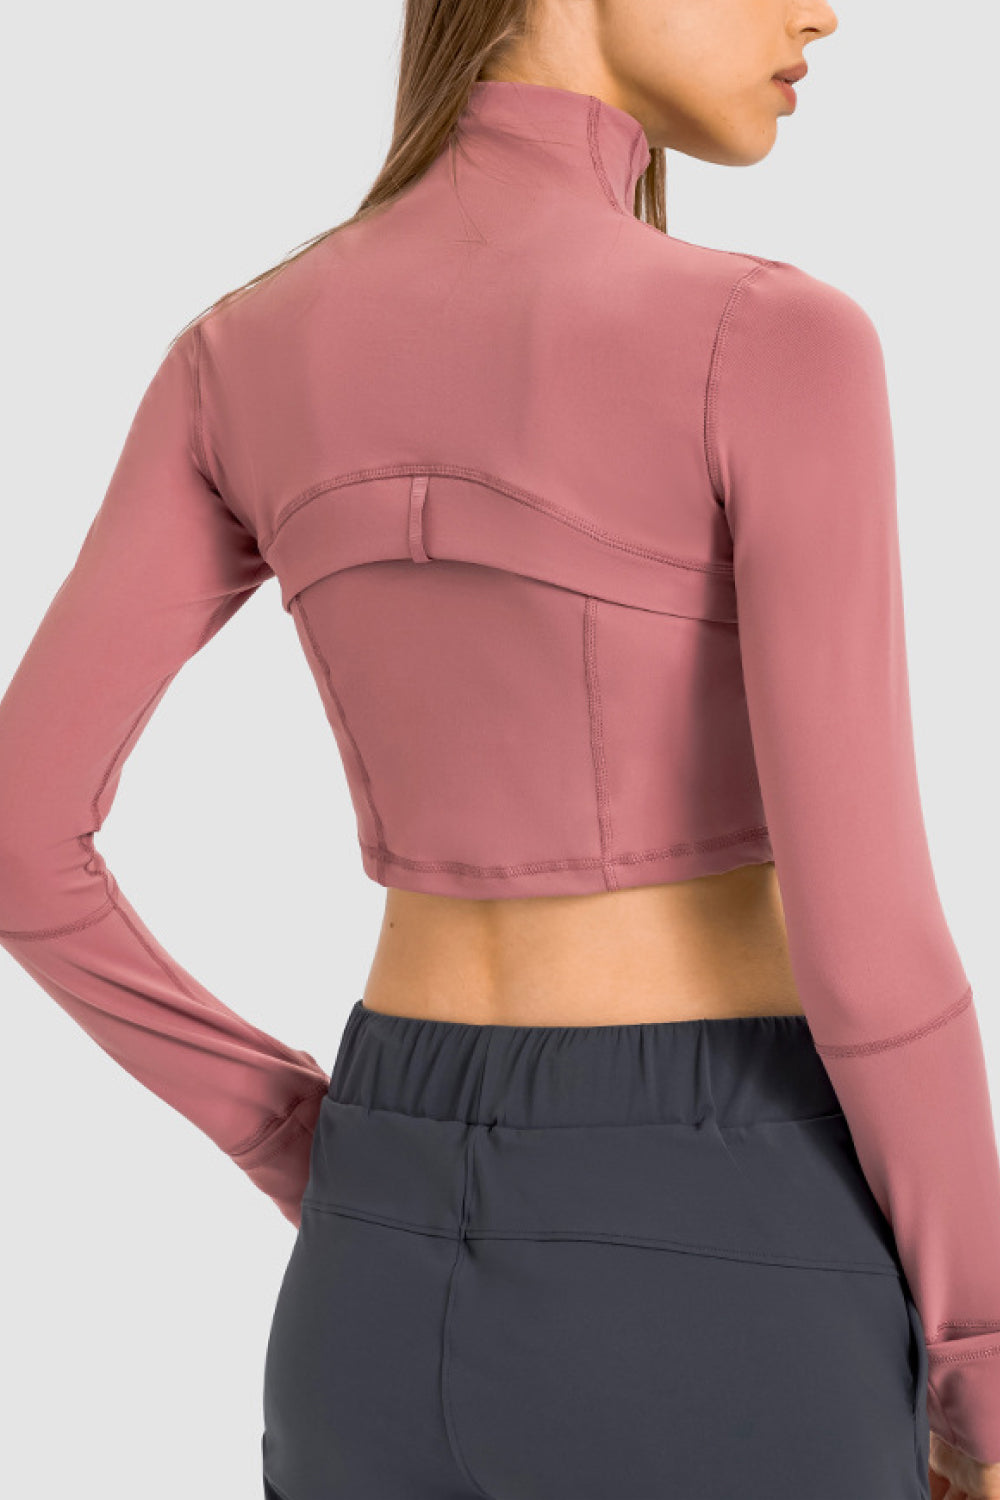 Women’s Zip Front Cropped Sports Jacket